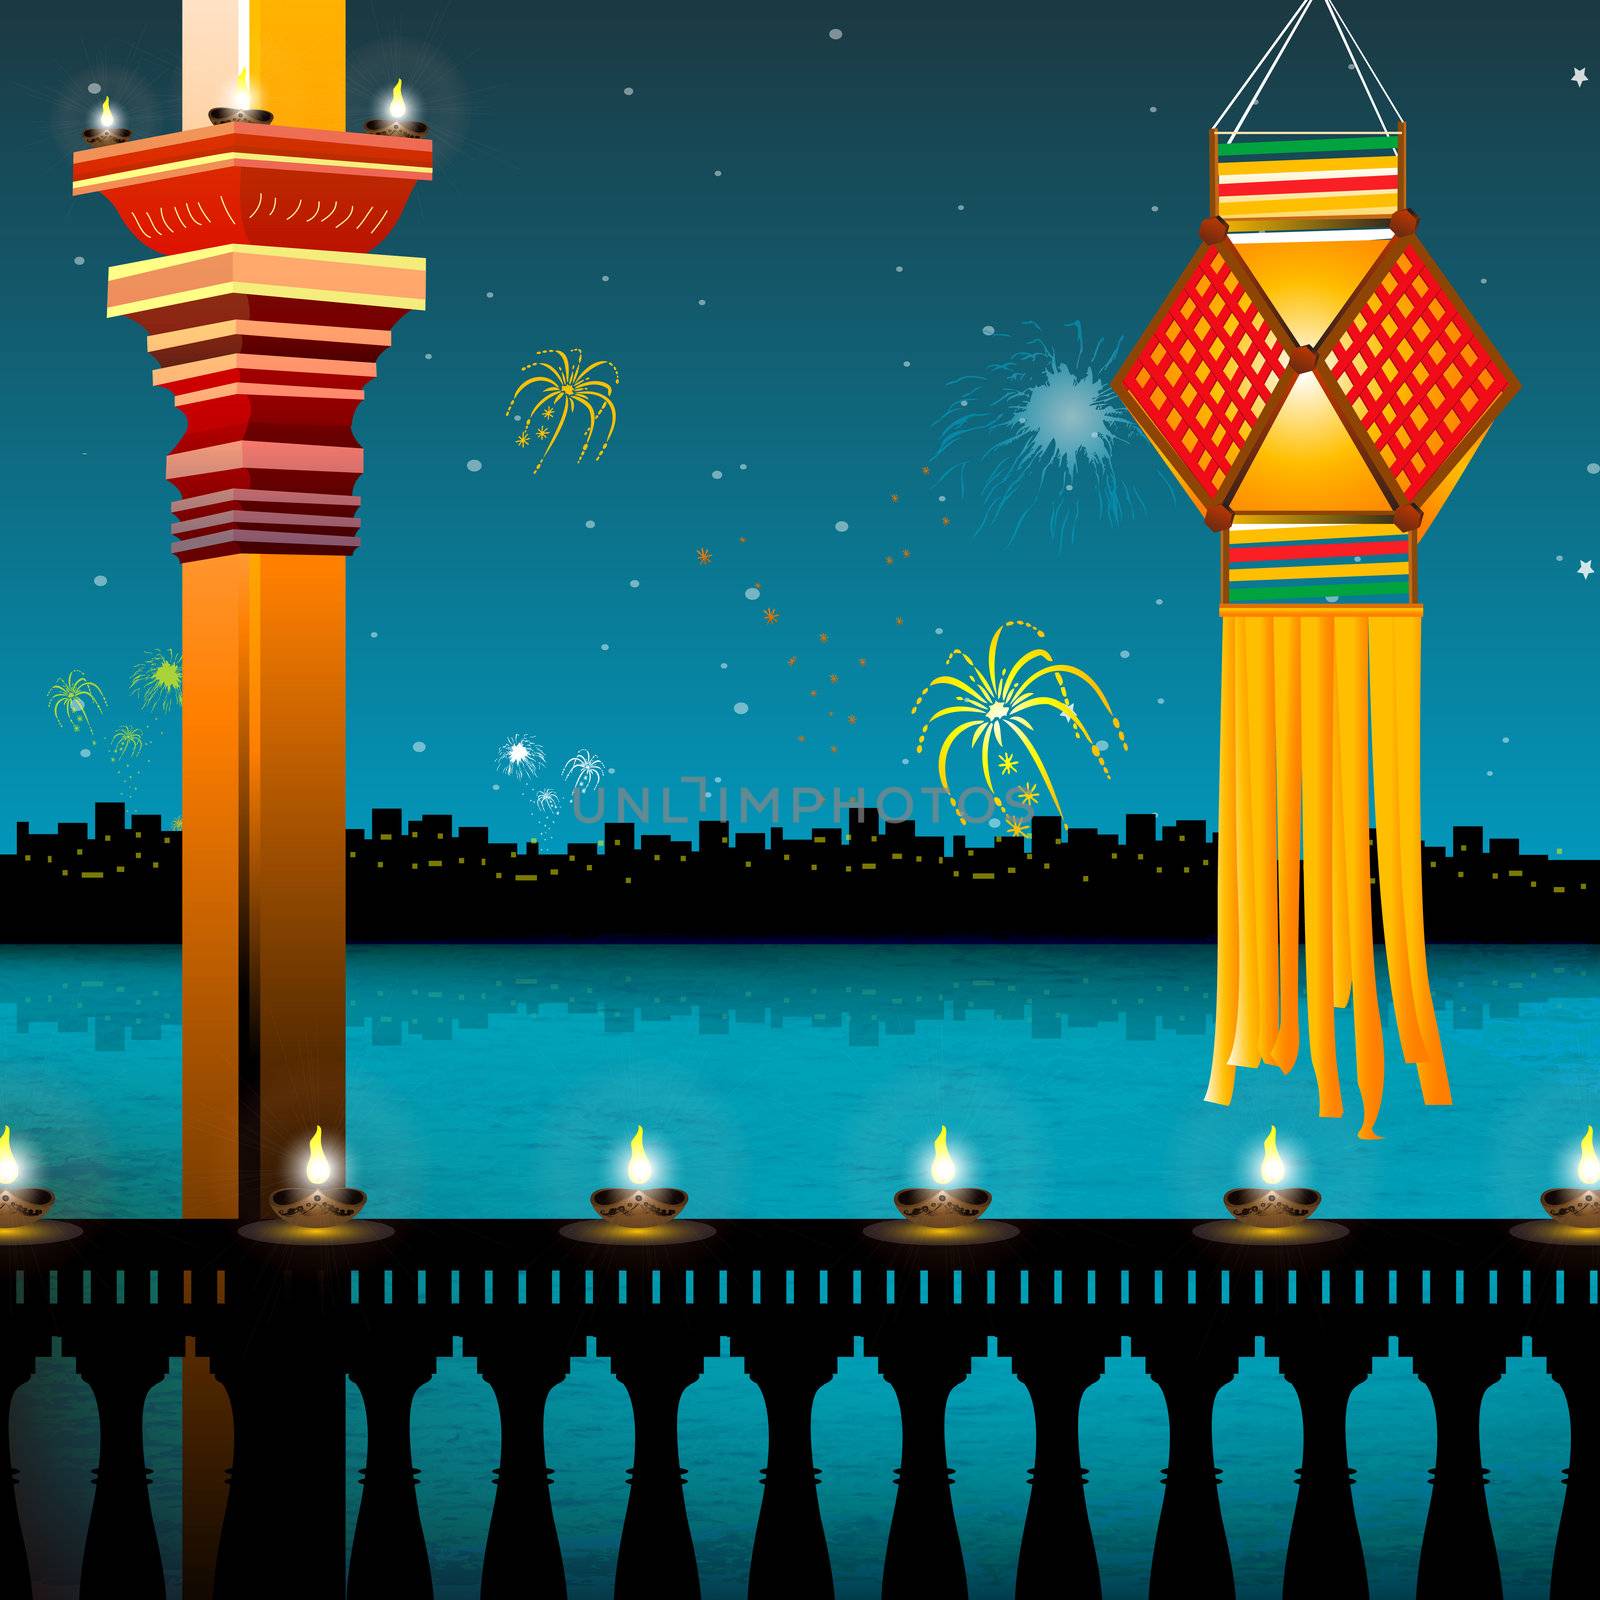 lamp lighting, lanterns, fireworks, balcony,festival - diwali by abhishek4383